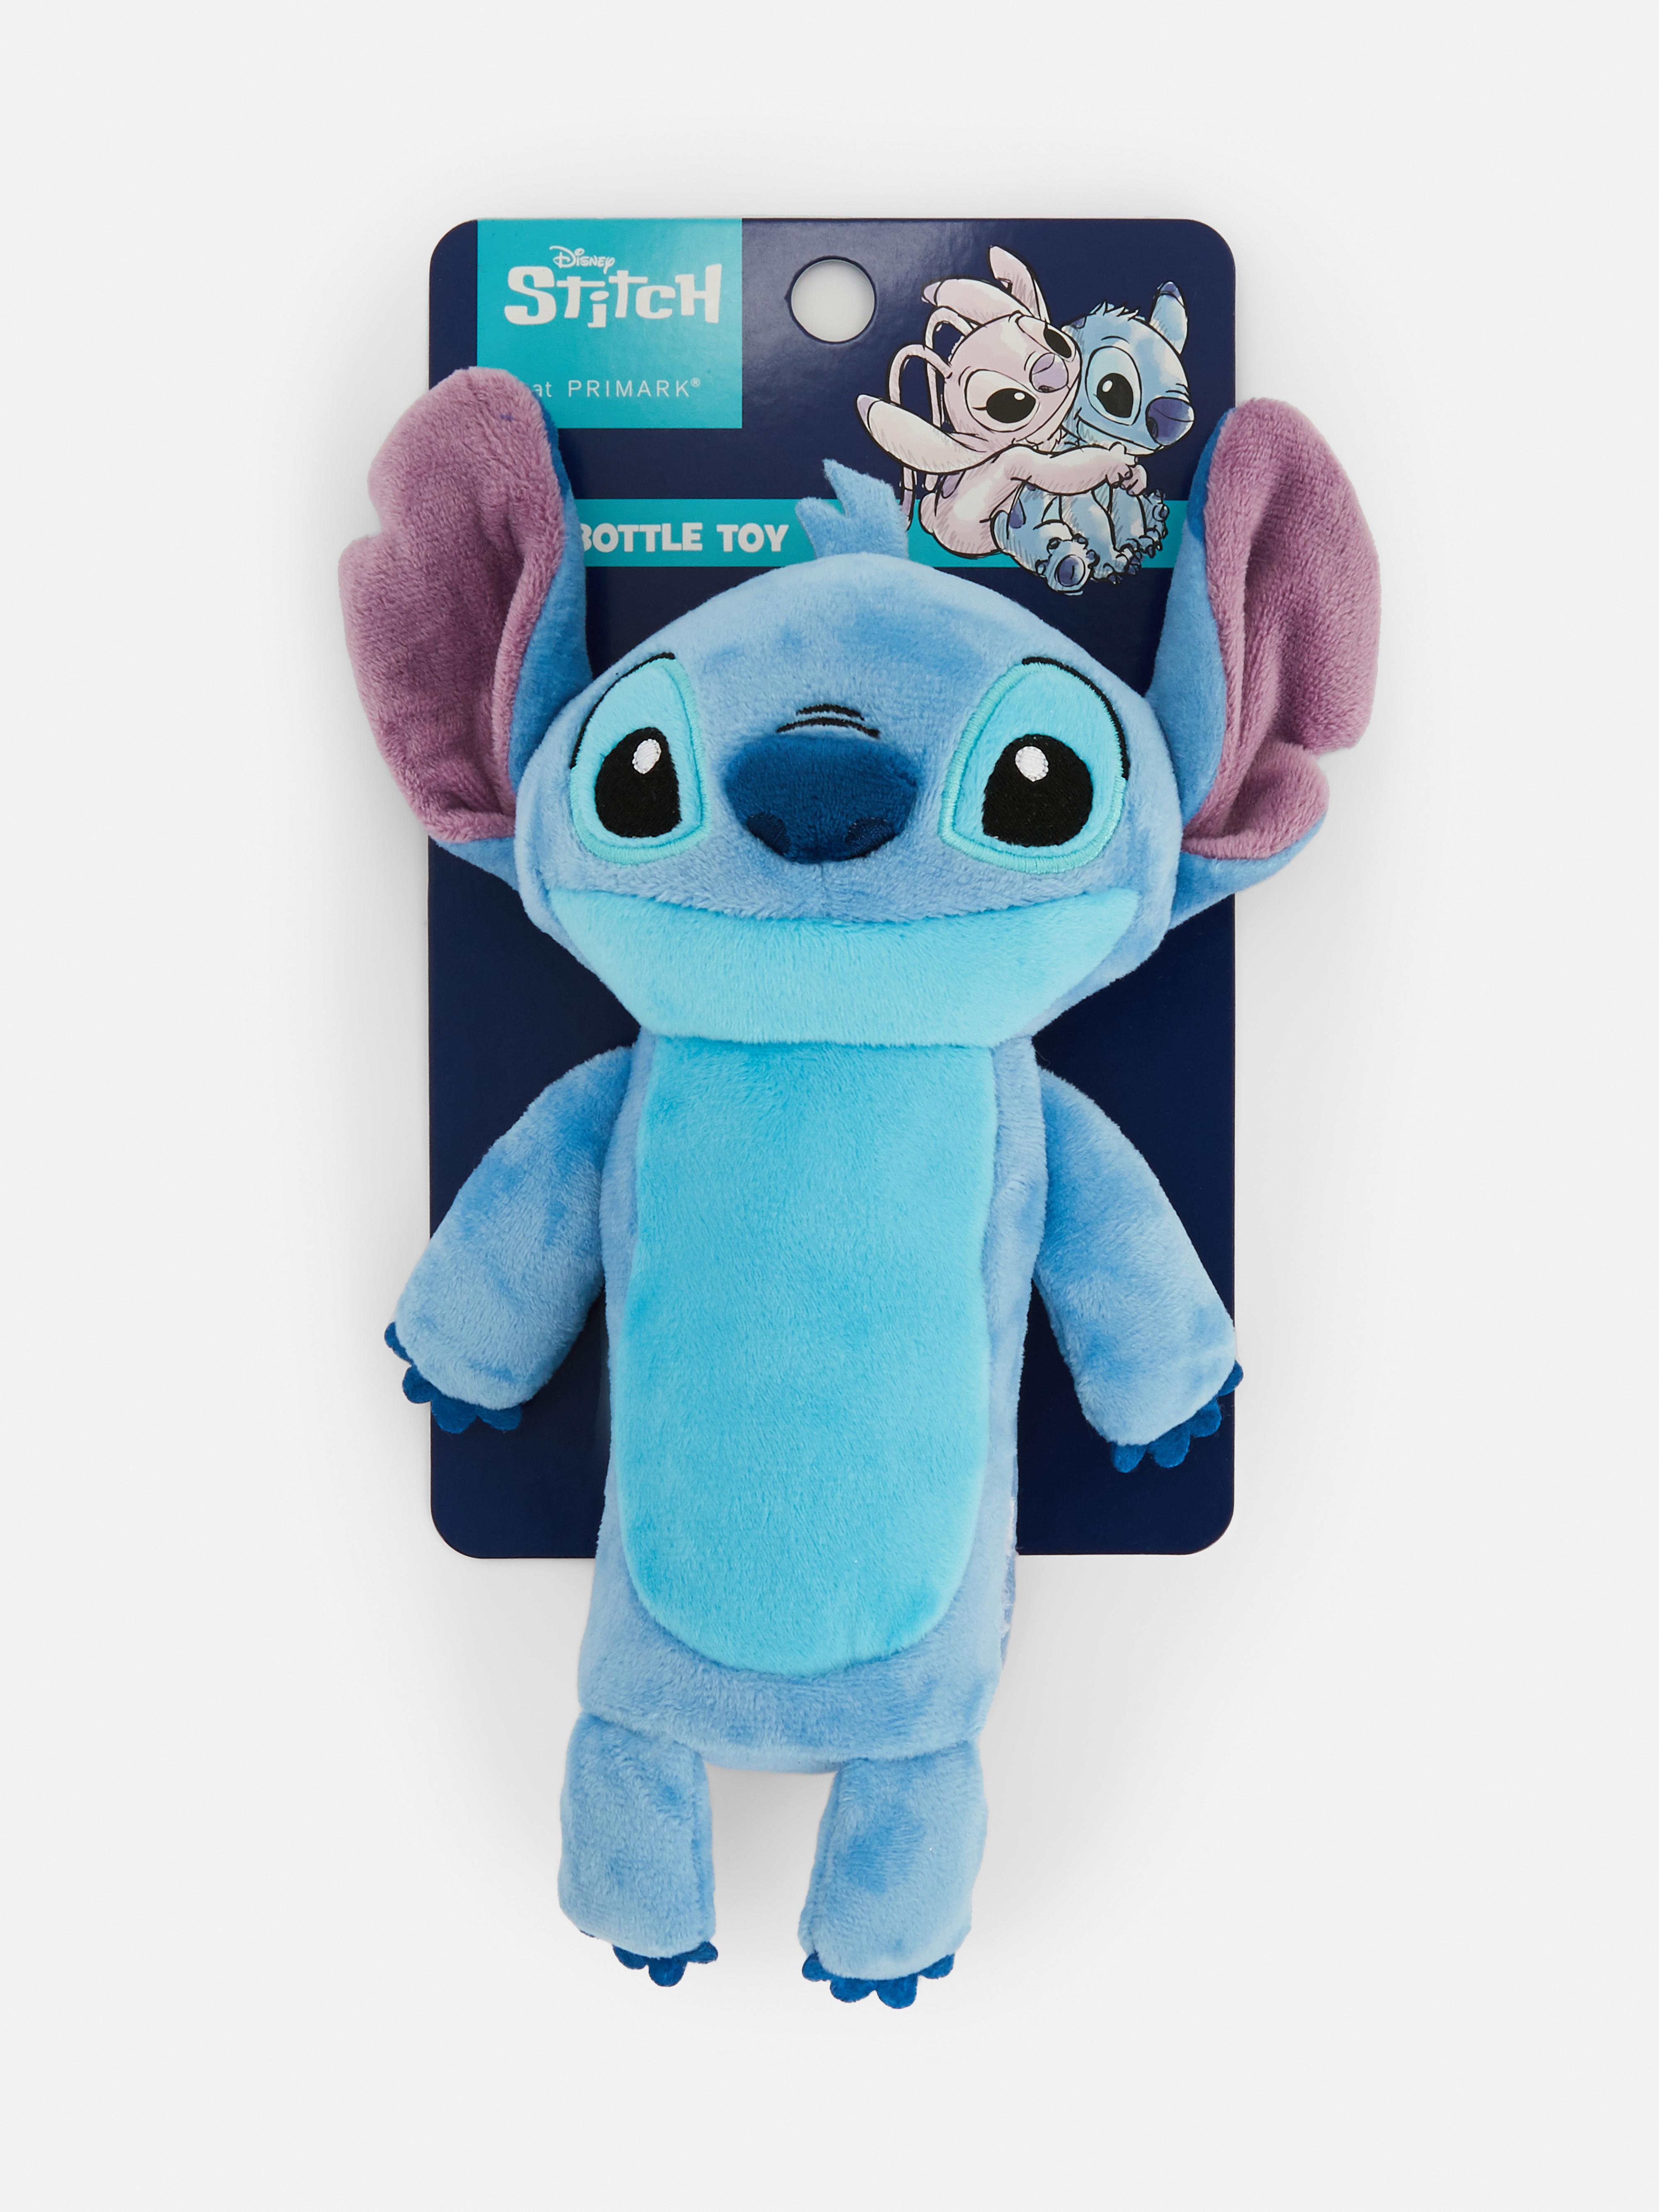 Blue Disney's Lilo & Stitch Bottle Toy